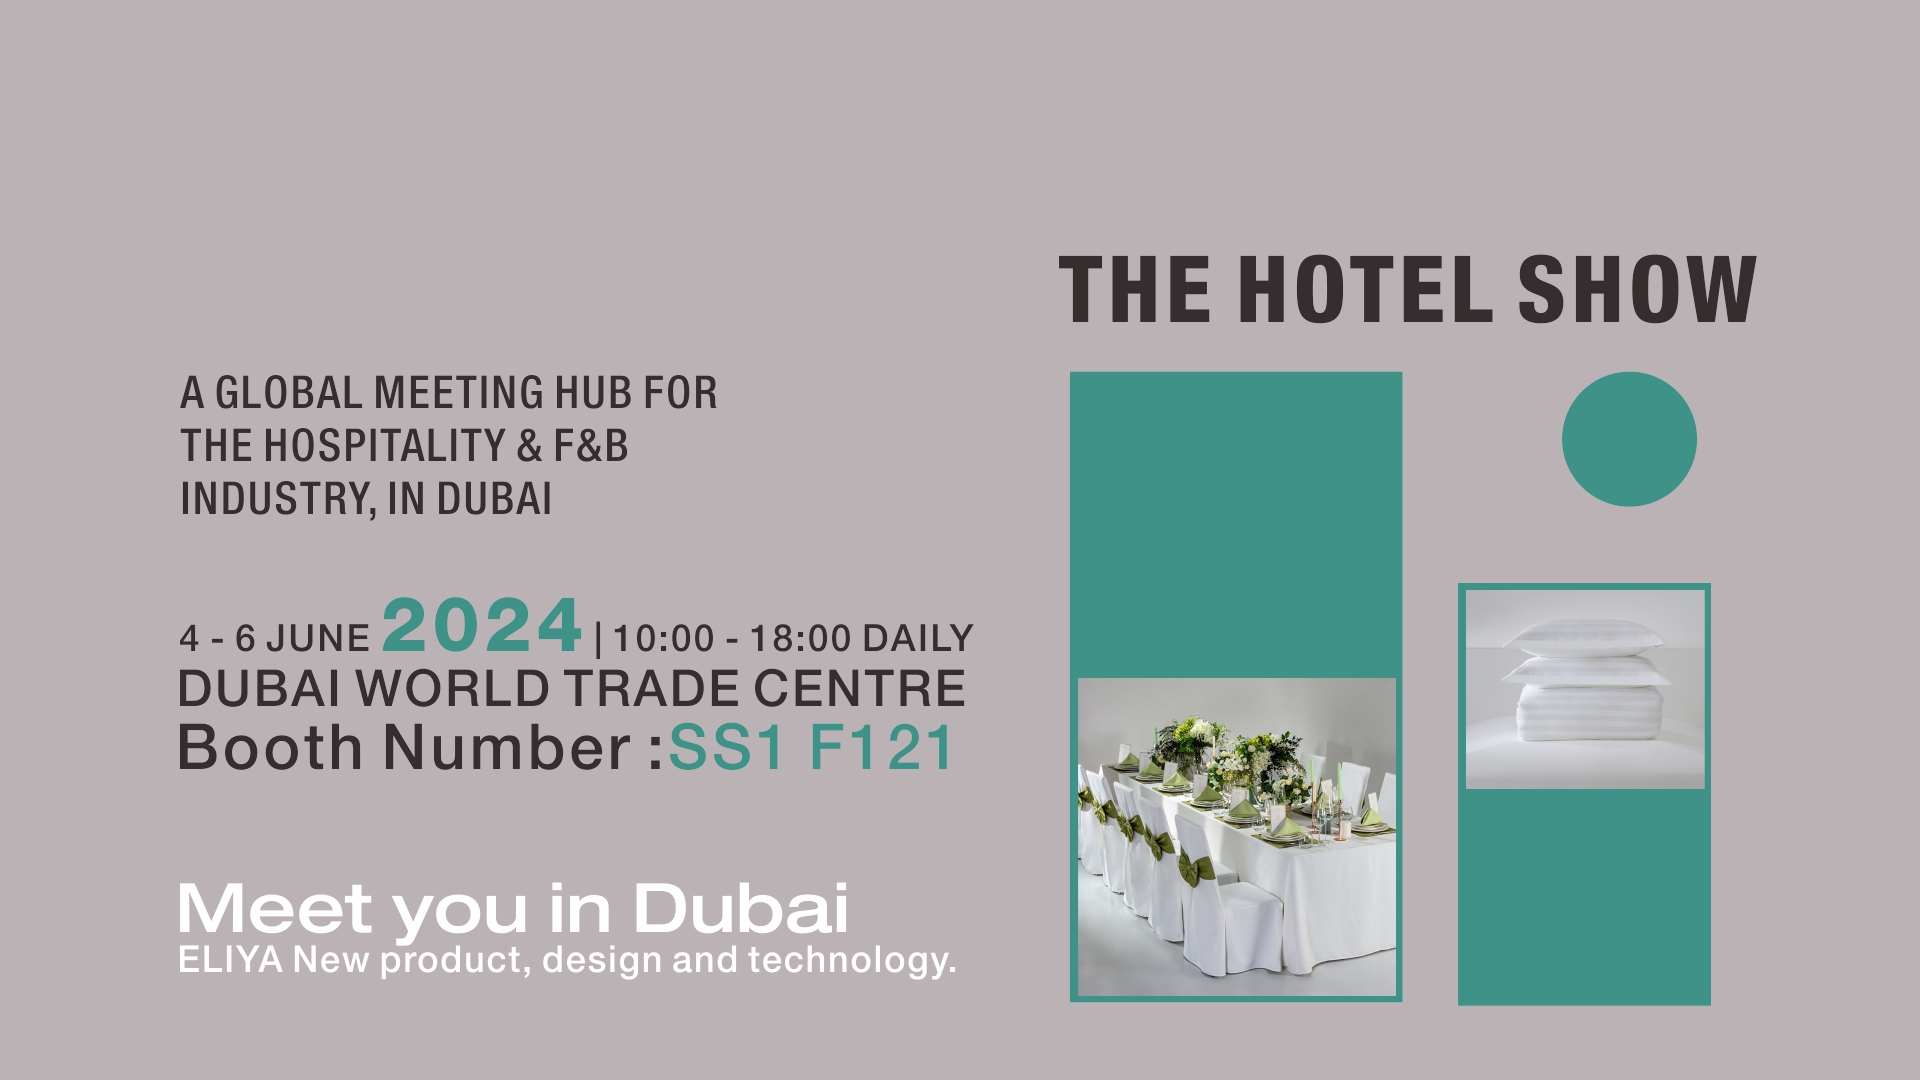 ELIYA Hotel Linen to showcase premium hospitality solutions at the 2024 Dubai Hotel Show